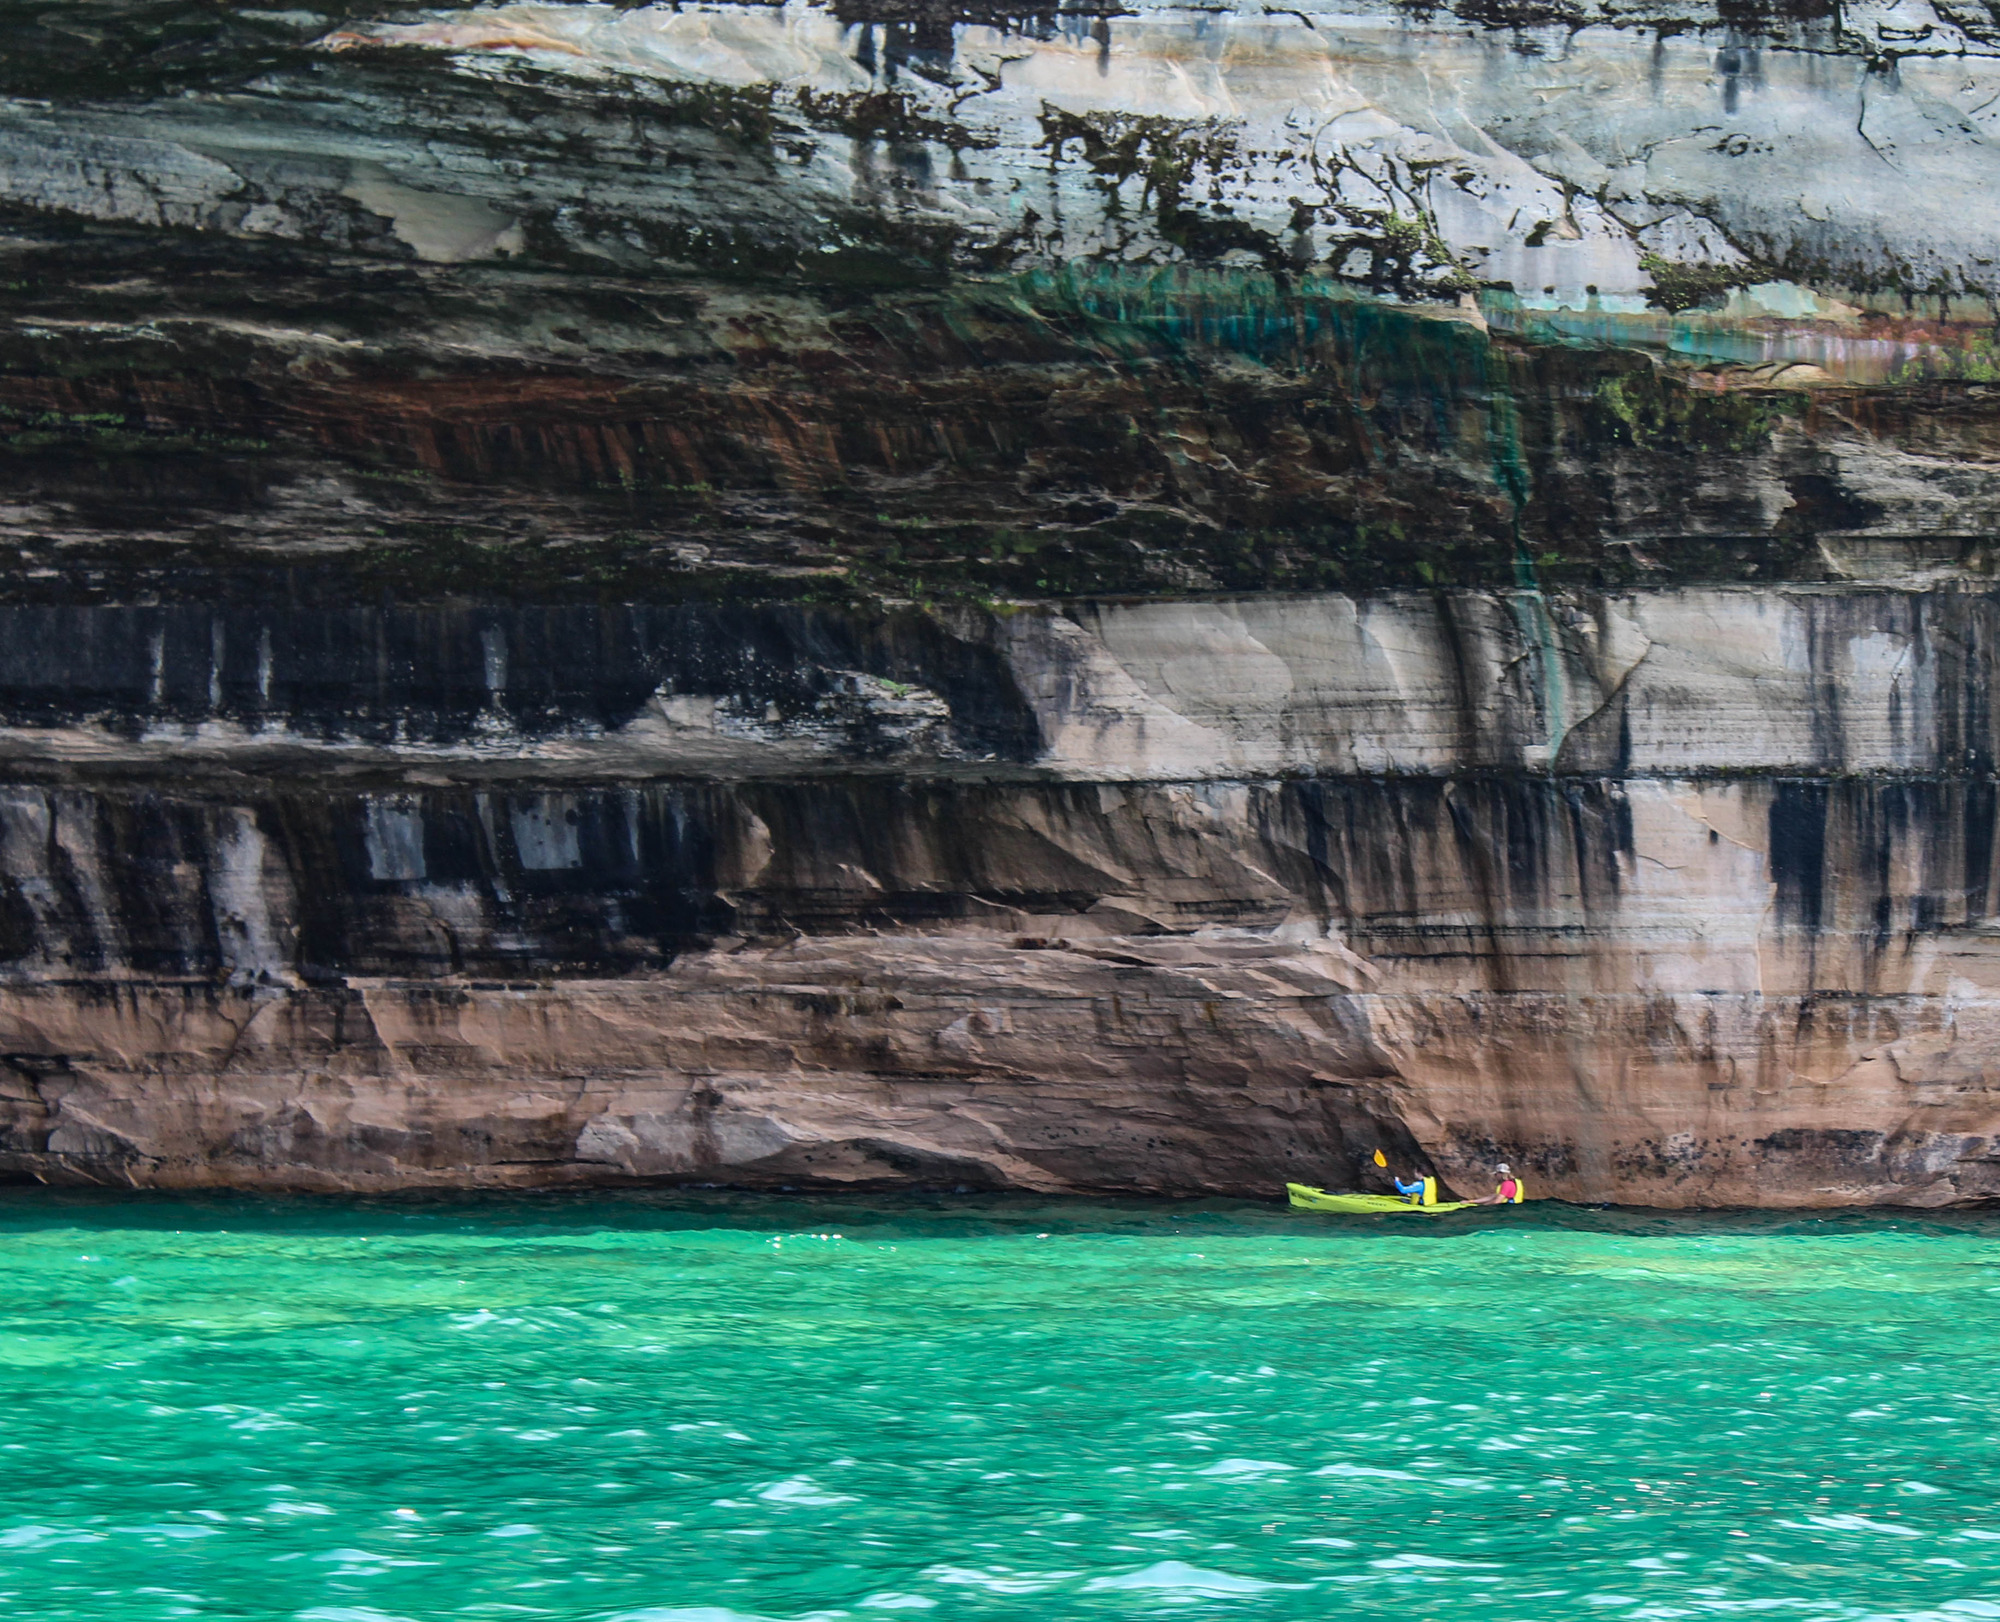 Kayakers by a tall rock wall along a lake